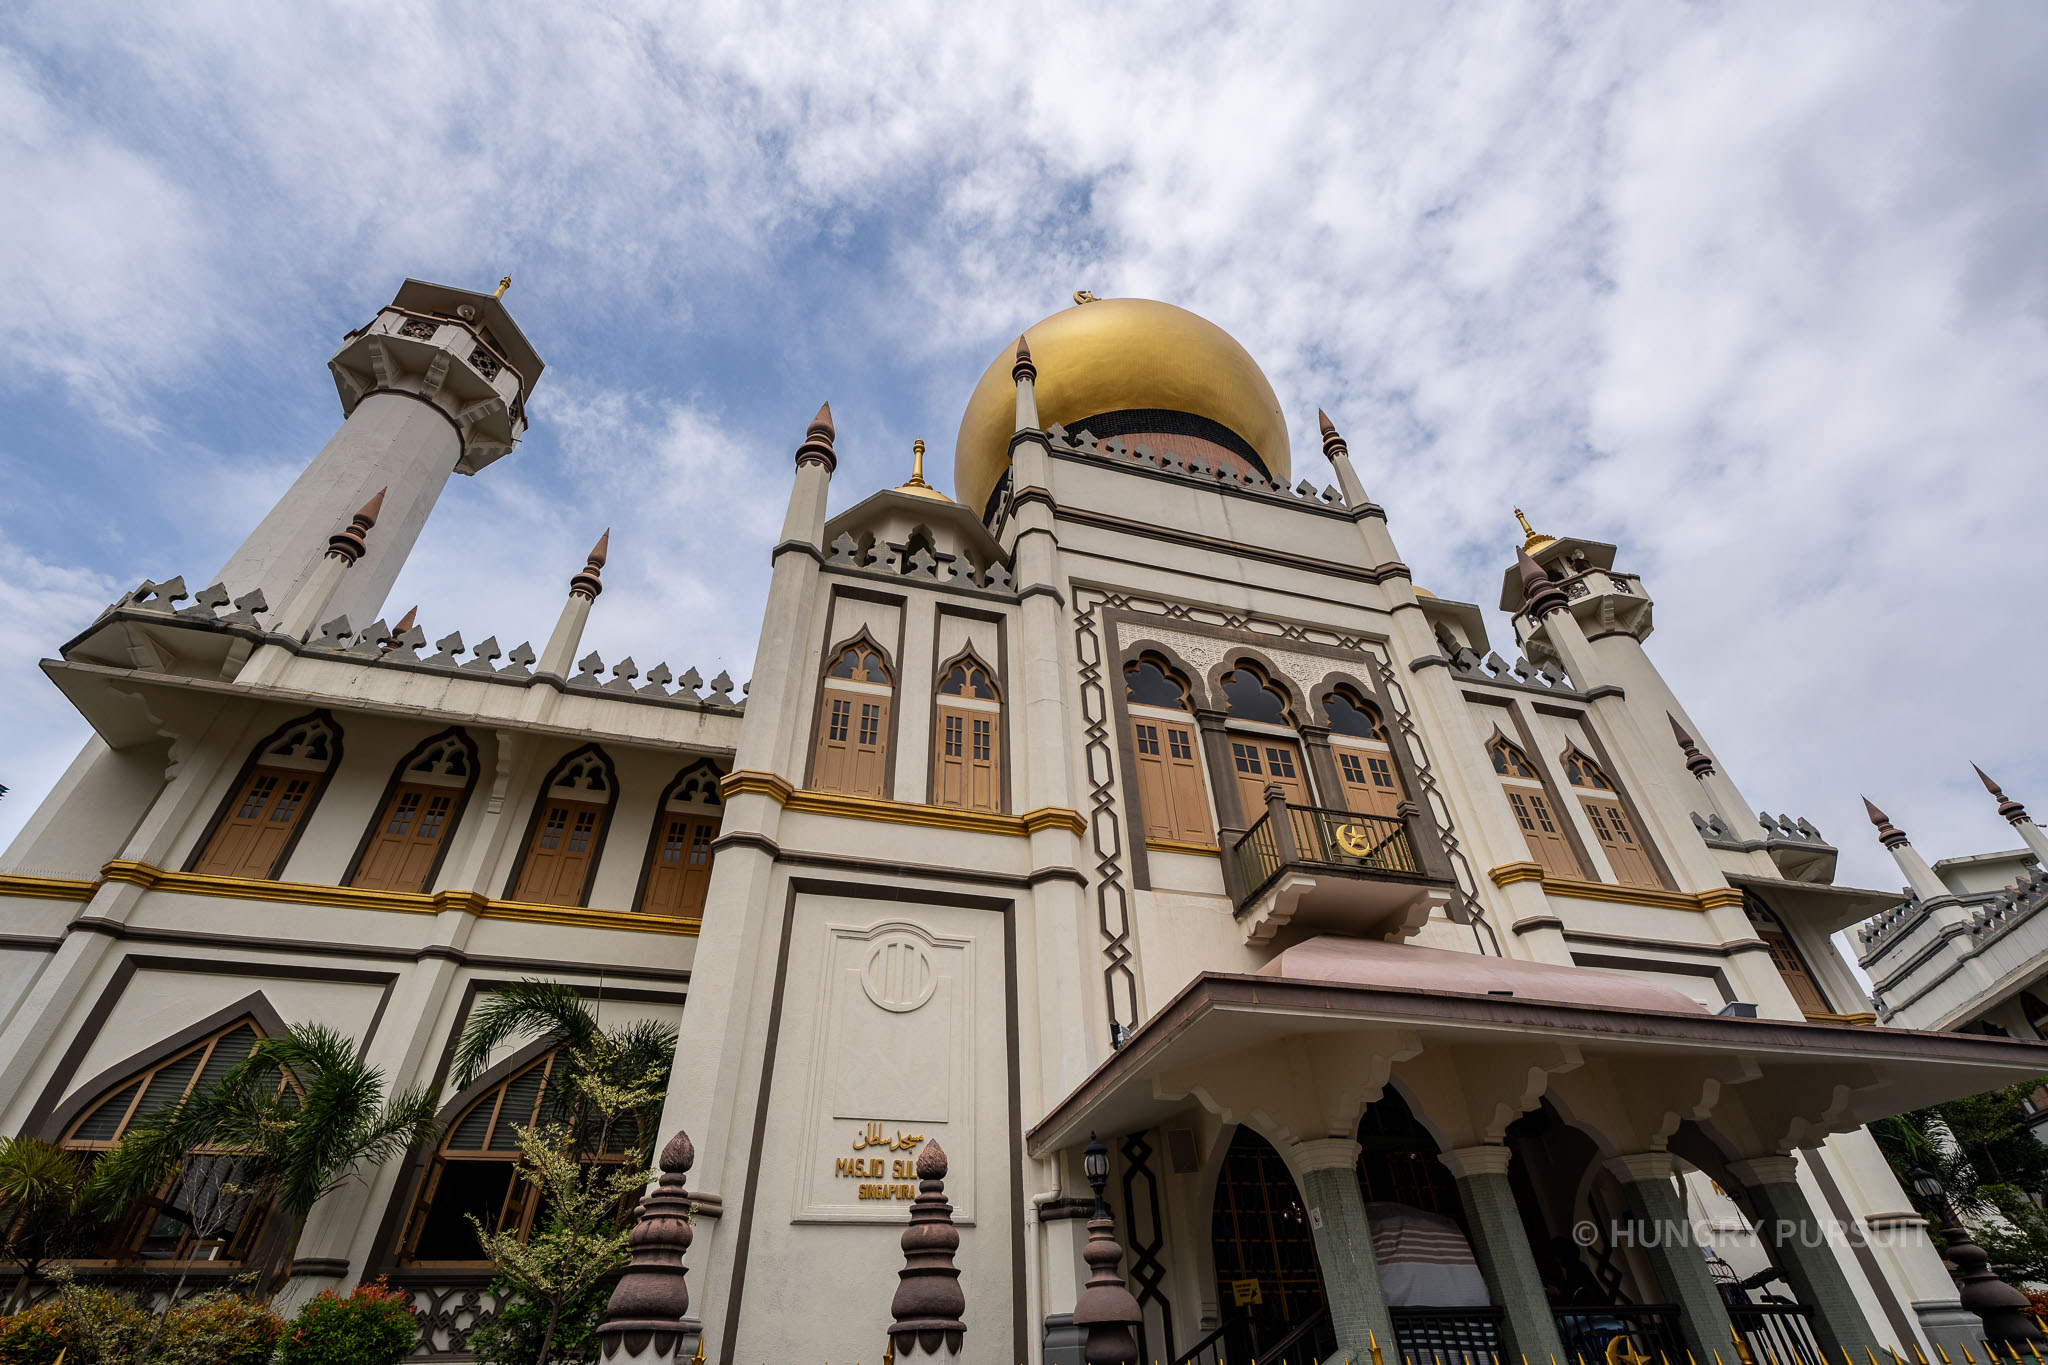 Front view of Sultan Mosque, a historic landmark in Haji Lane, Singapore.